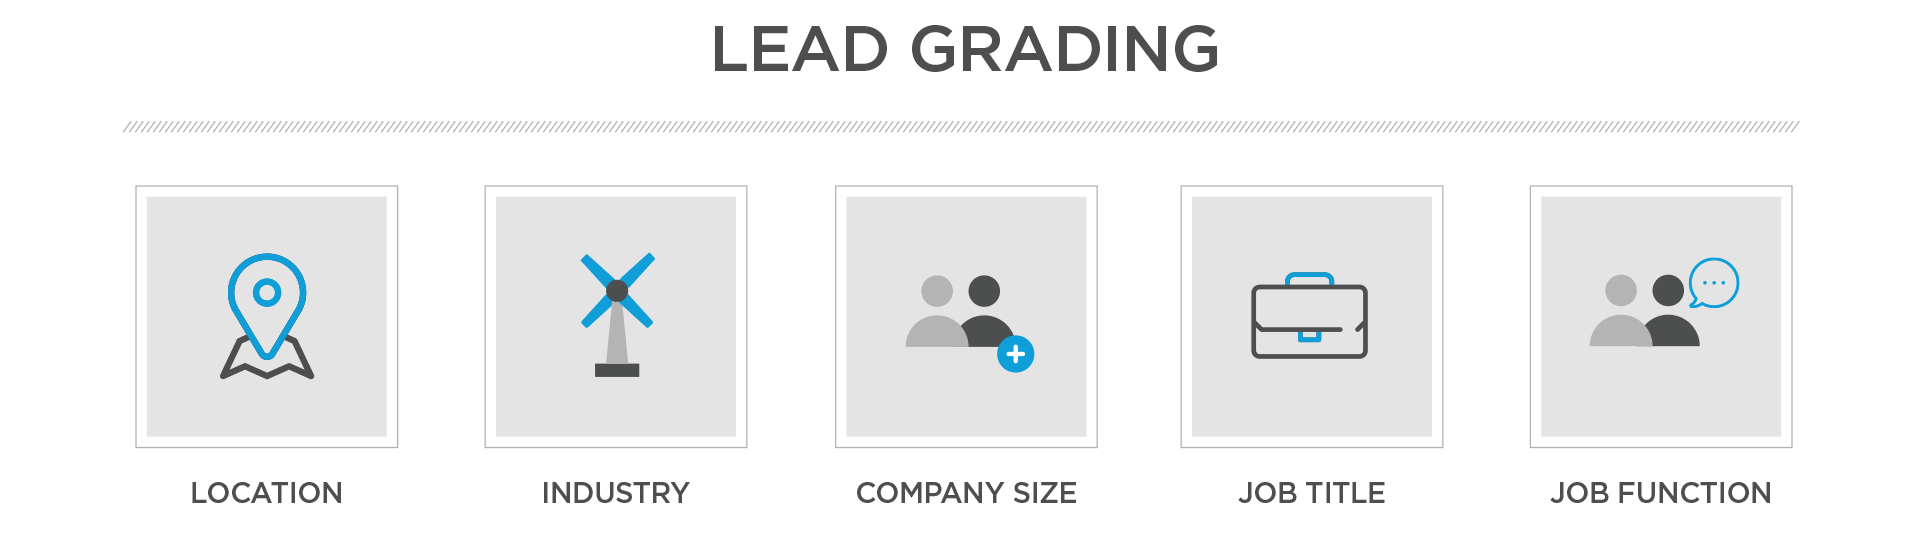 lead-grading-scoring